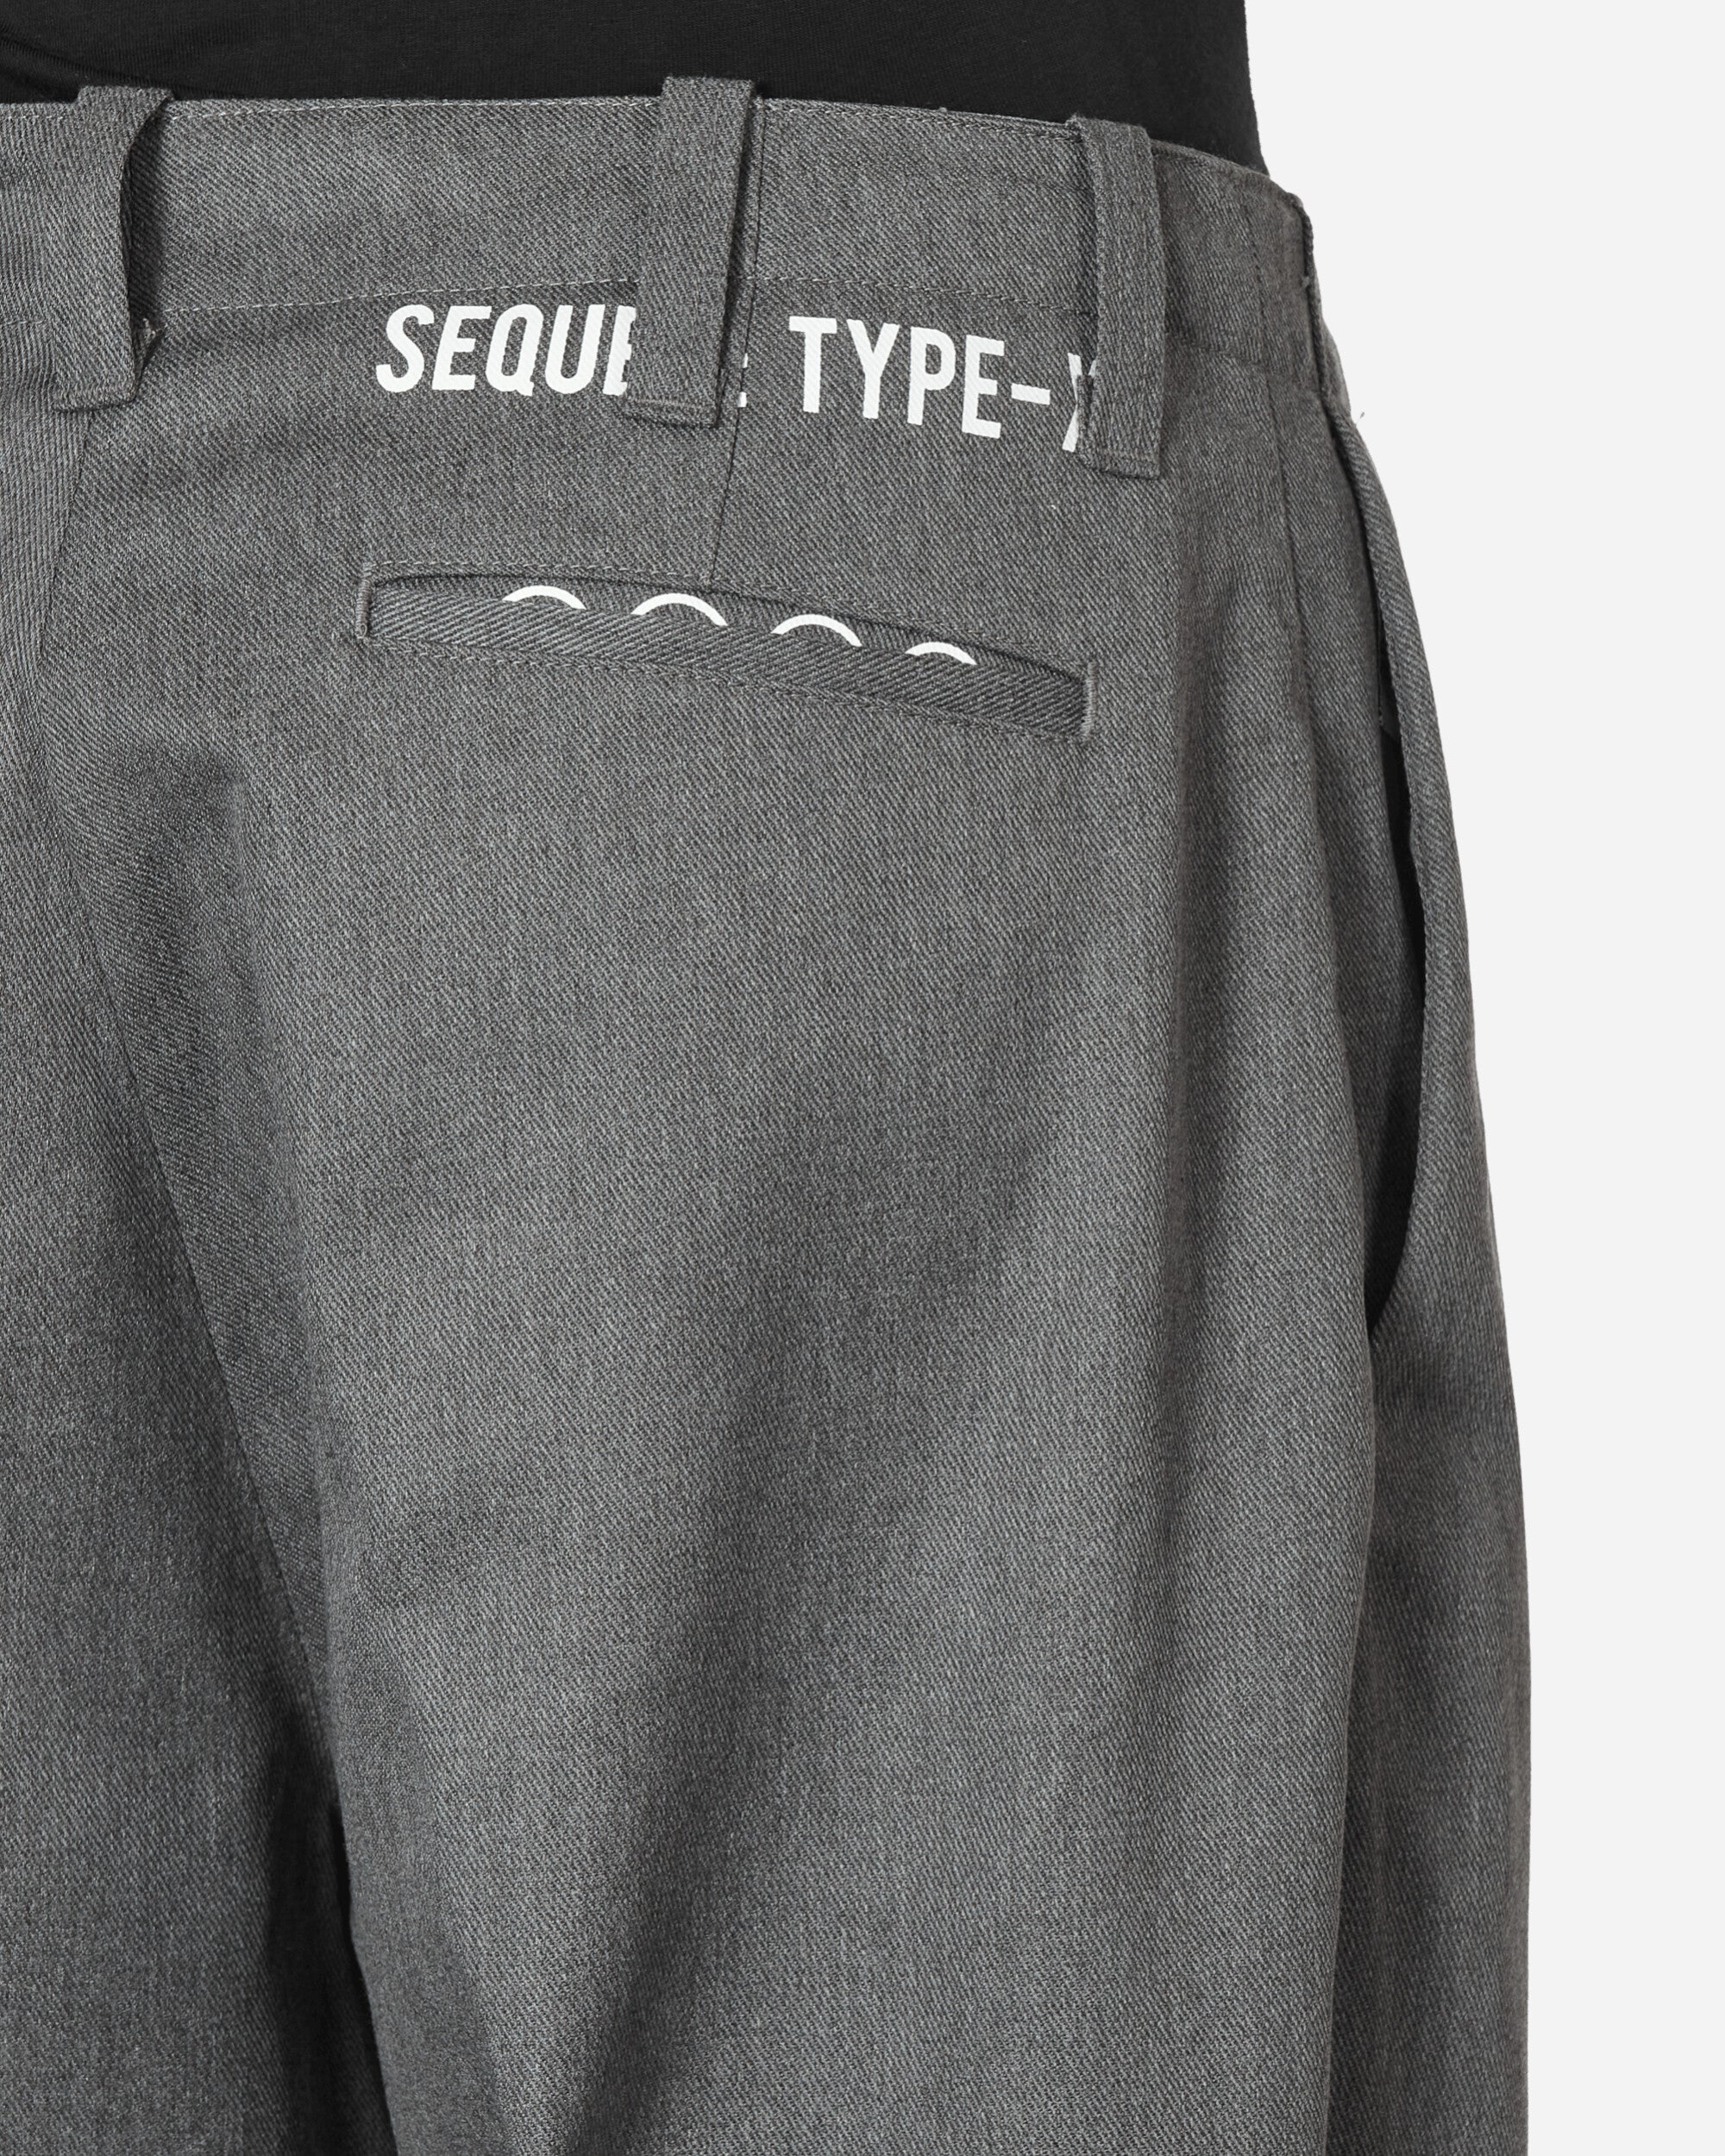 保証書付】 SEQUEL PANTS(TYPE-F) SEQUEL CHINO BLACK PANTS(TYPE-XF